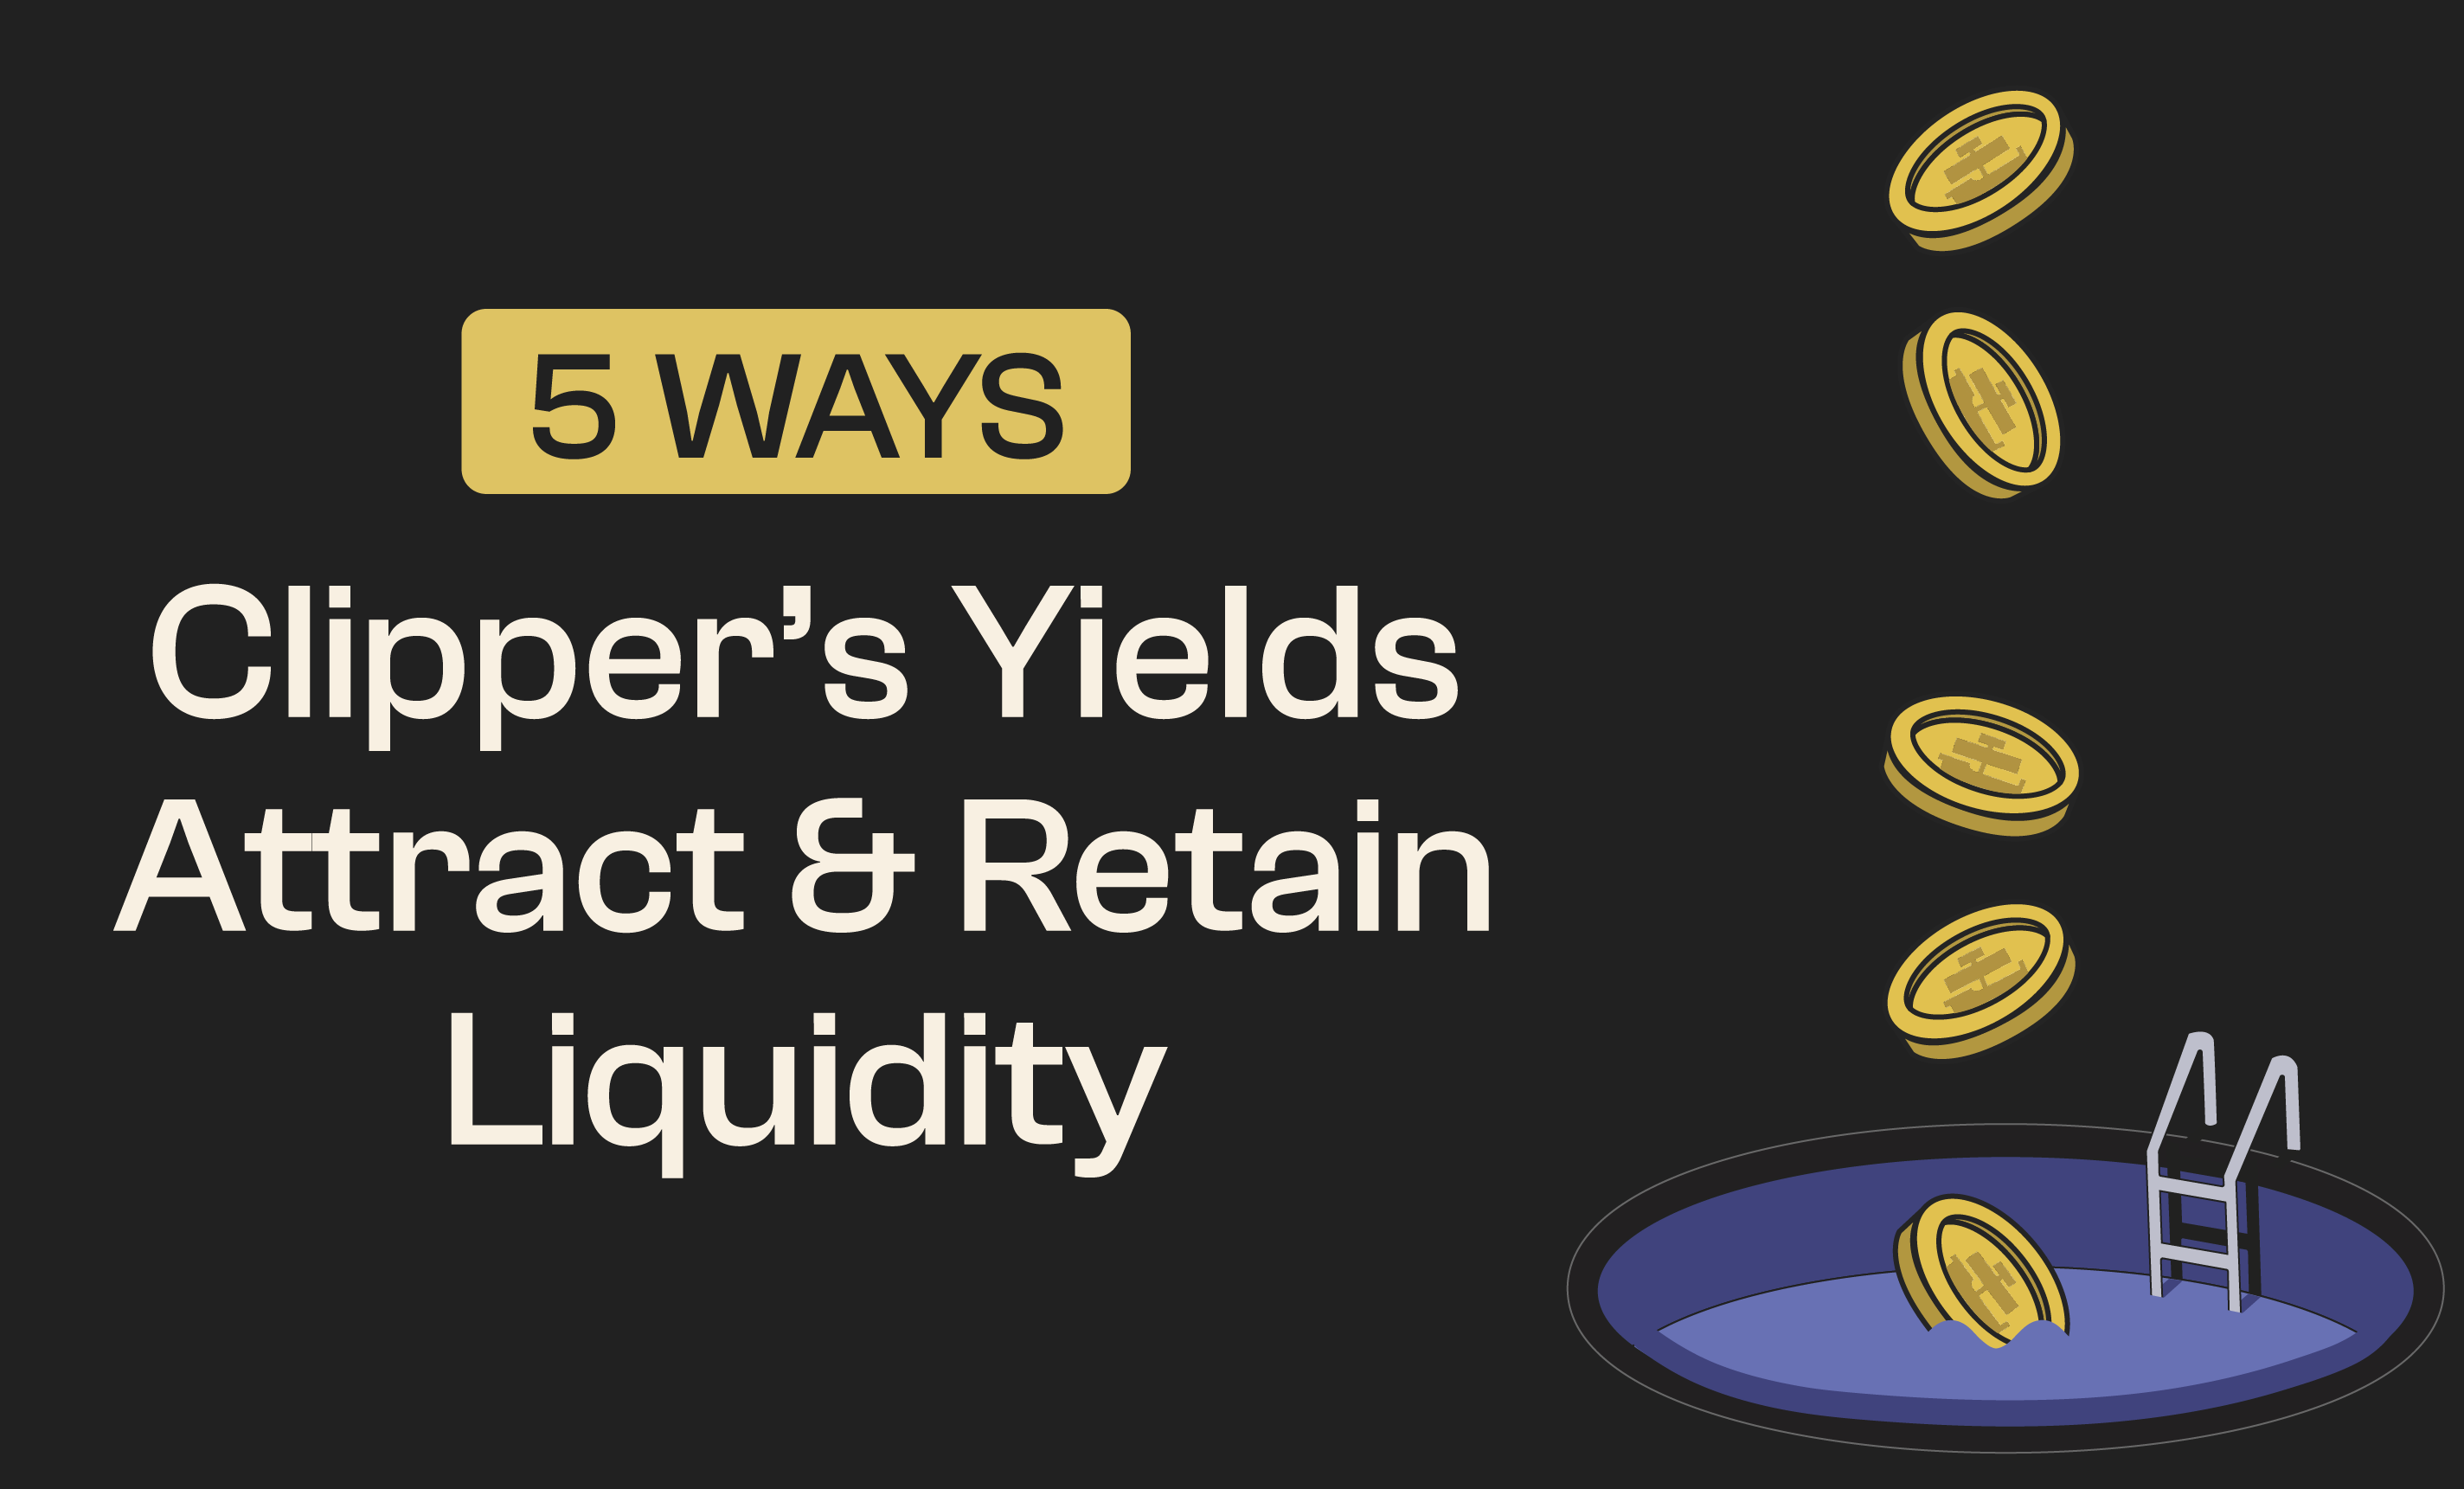 5 Ways Clipper’s Yields Attract & Retain Liquidity